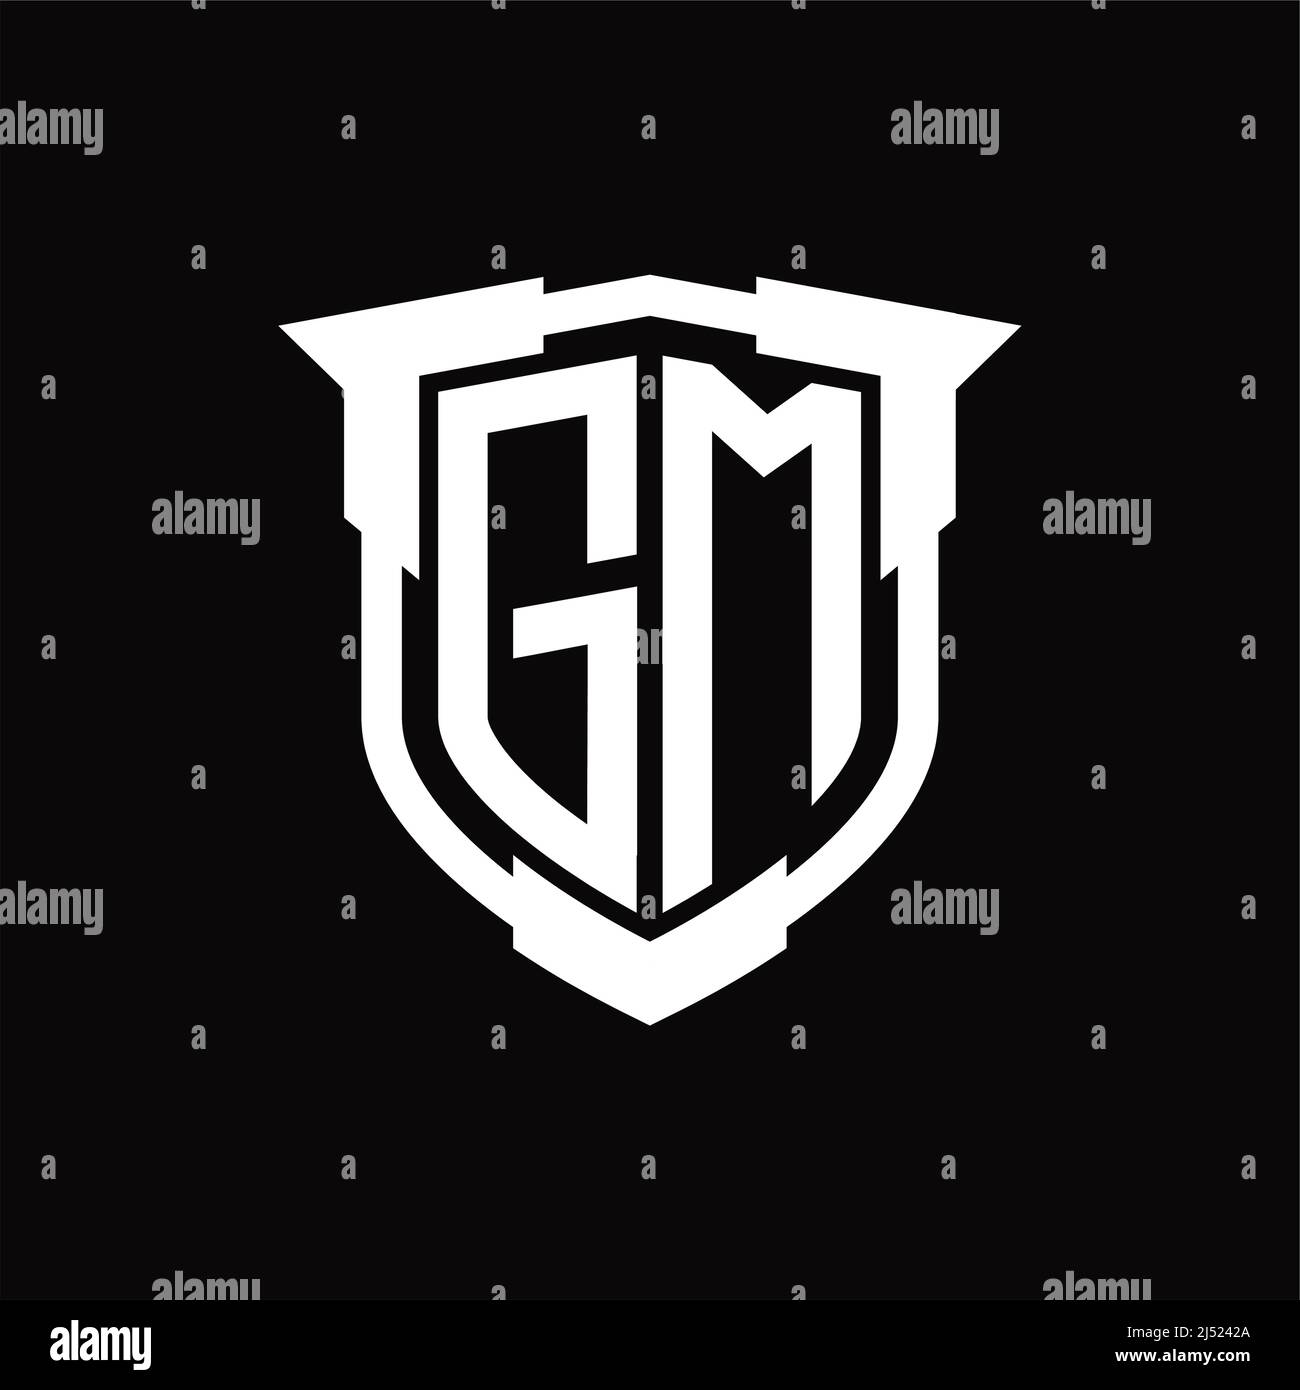 GM Letter Logo monogram simple hexagon shield shape isolated style design  template Stock Photo - Alamy